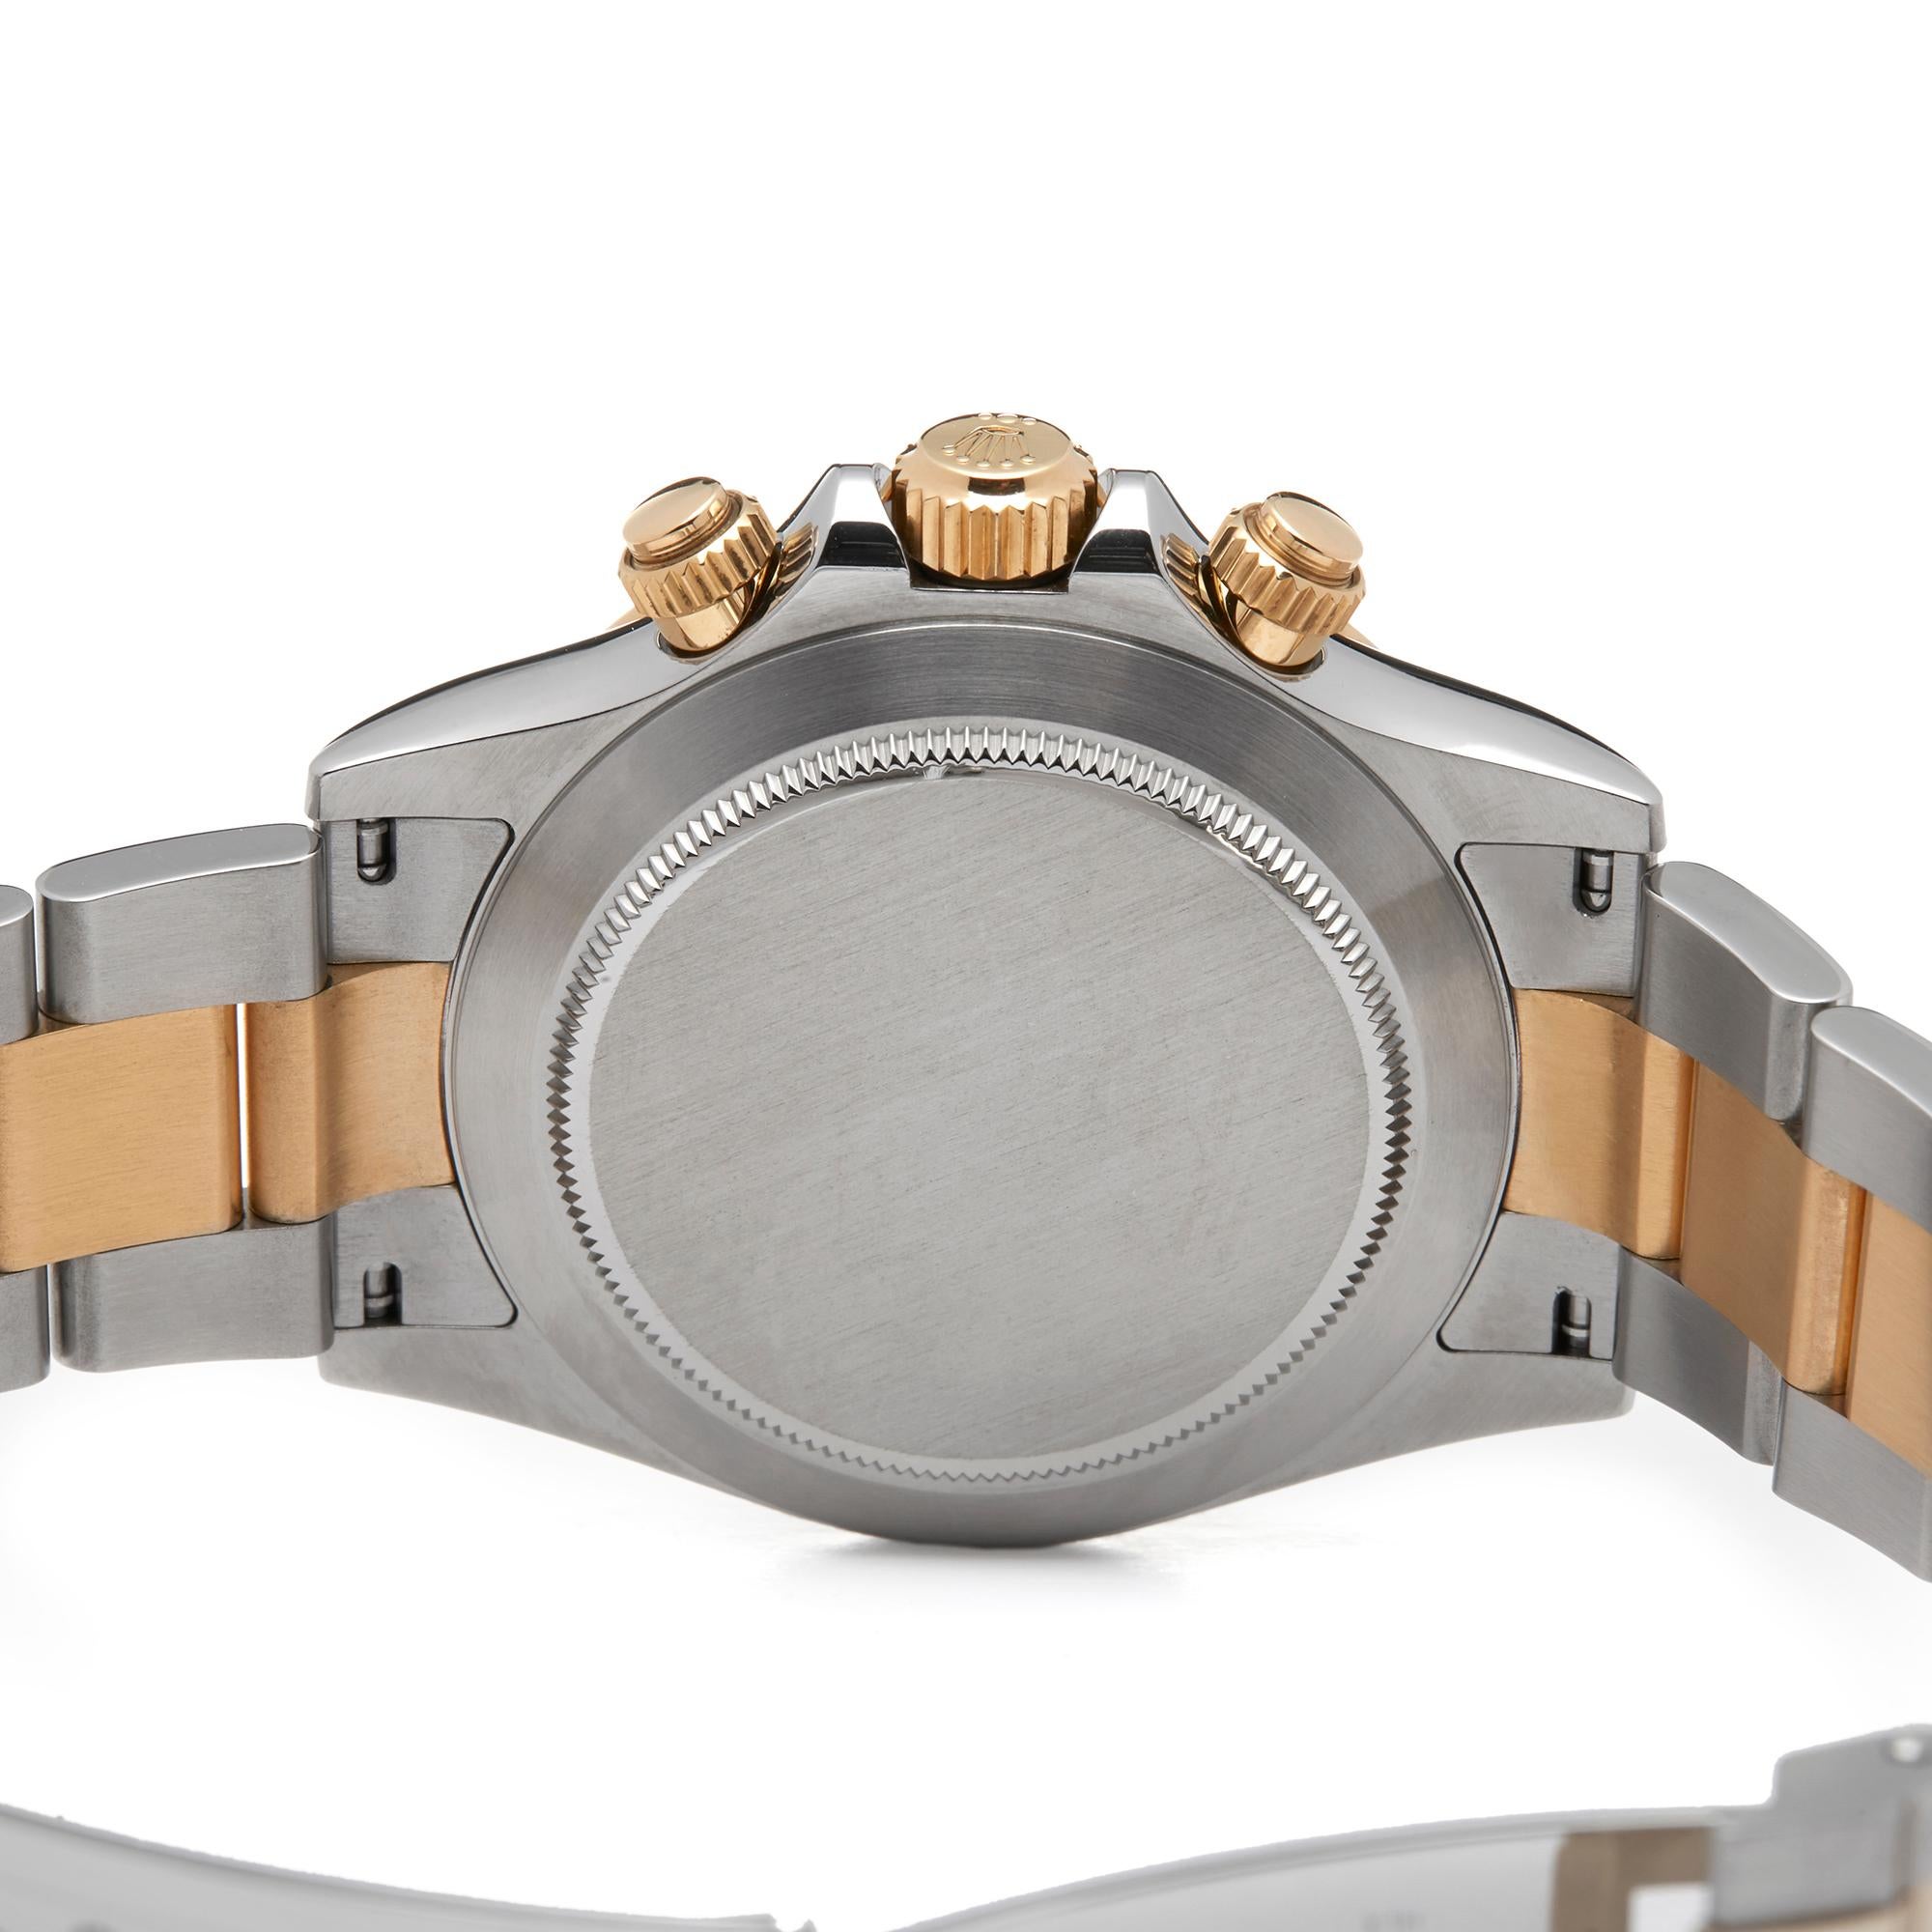 Rolex Daytona Stainless Steel and 18K Yellow Gold 116523 Wristwatch 2